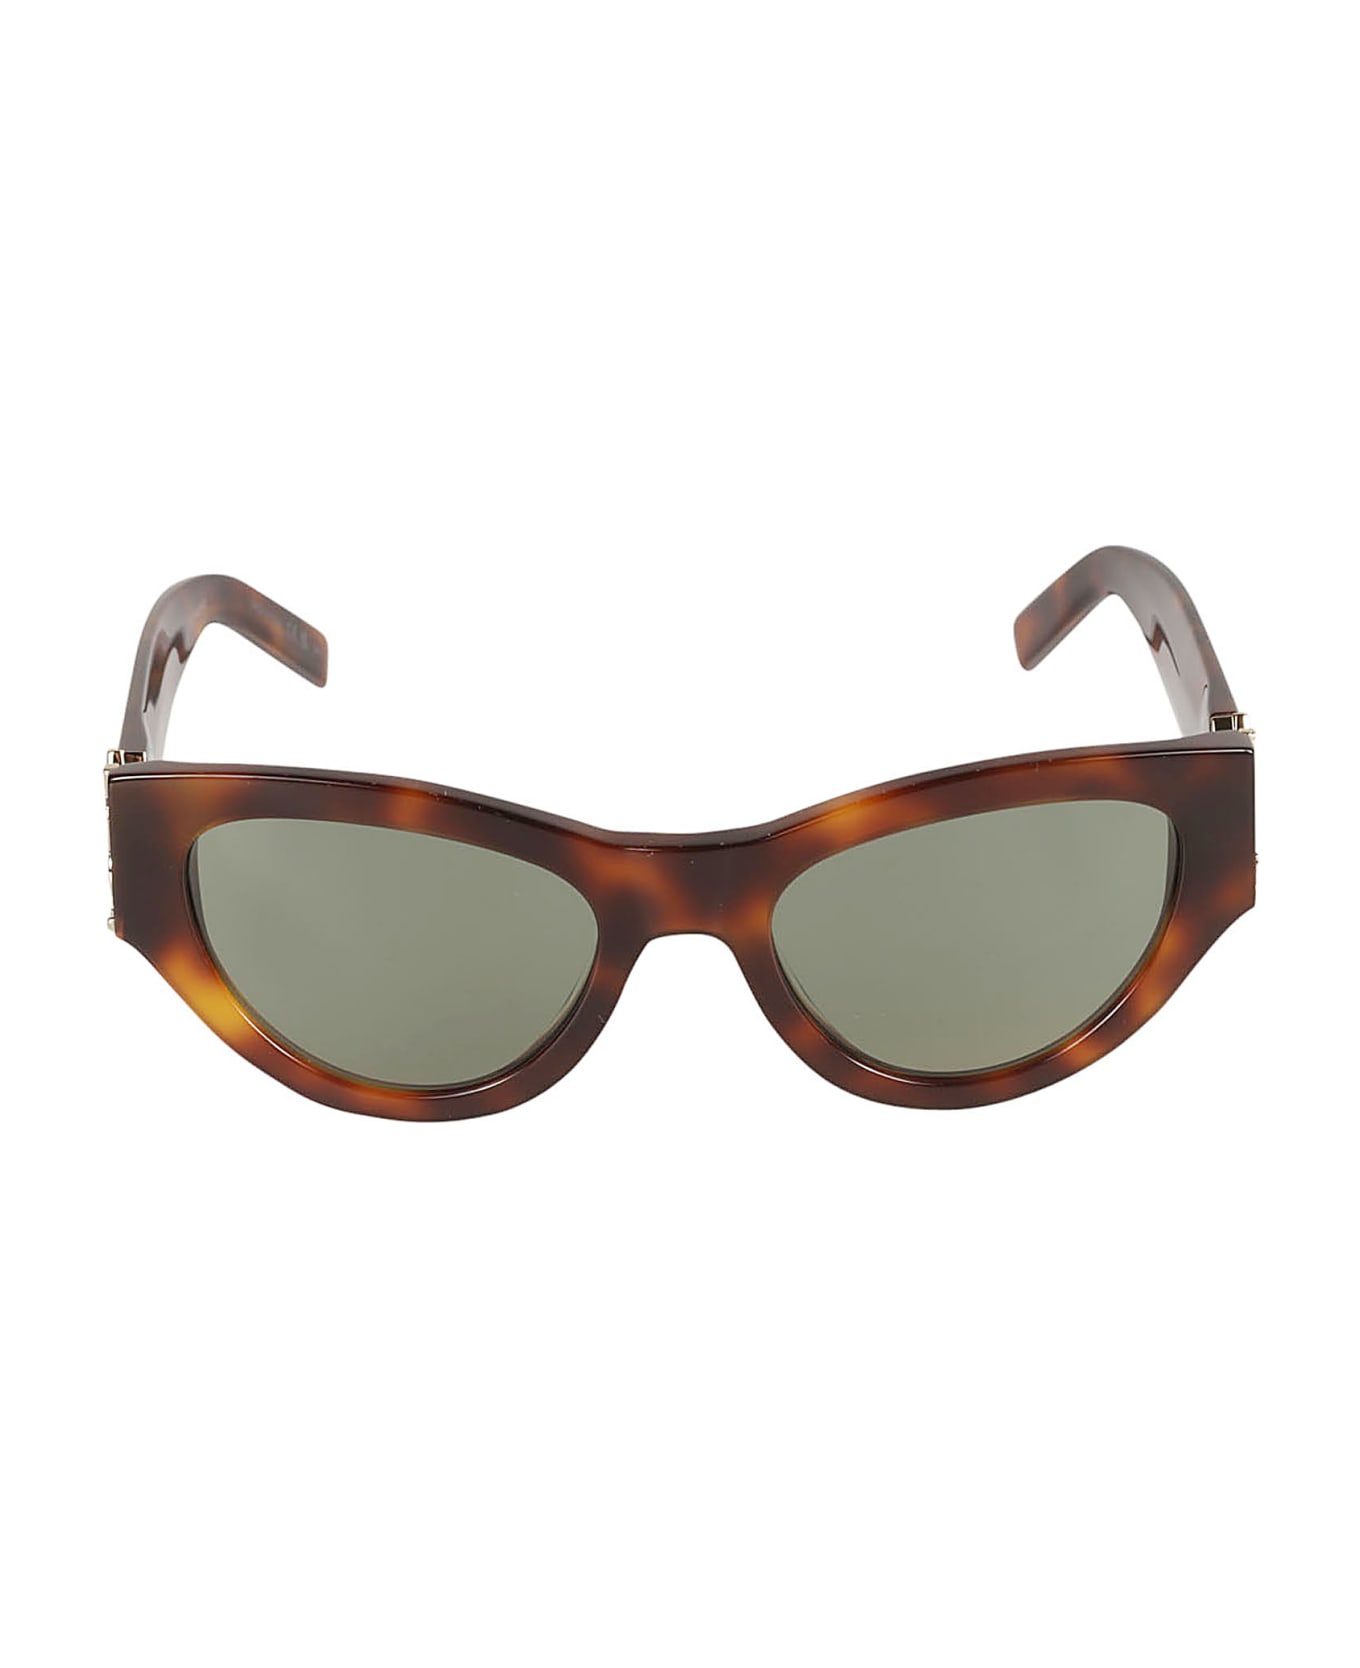 Saint Laurent Eyewear Ysl Hinge Flame Effect Oval Frame Sunglasses - Havana/Green